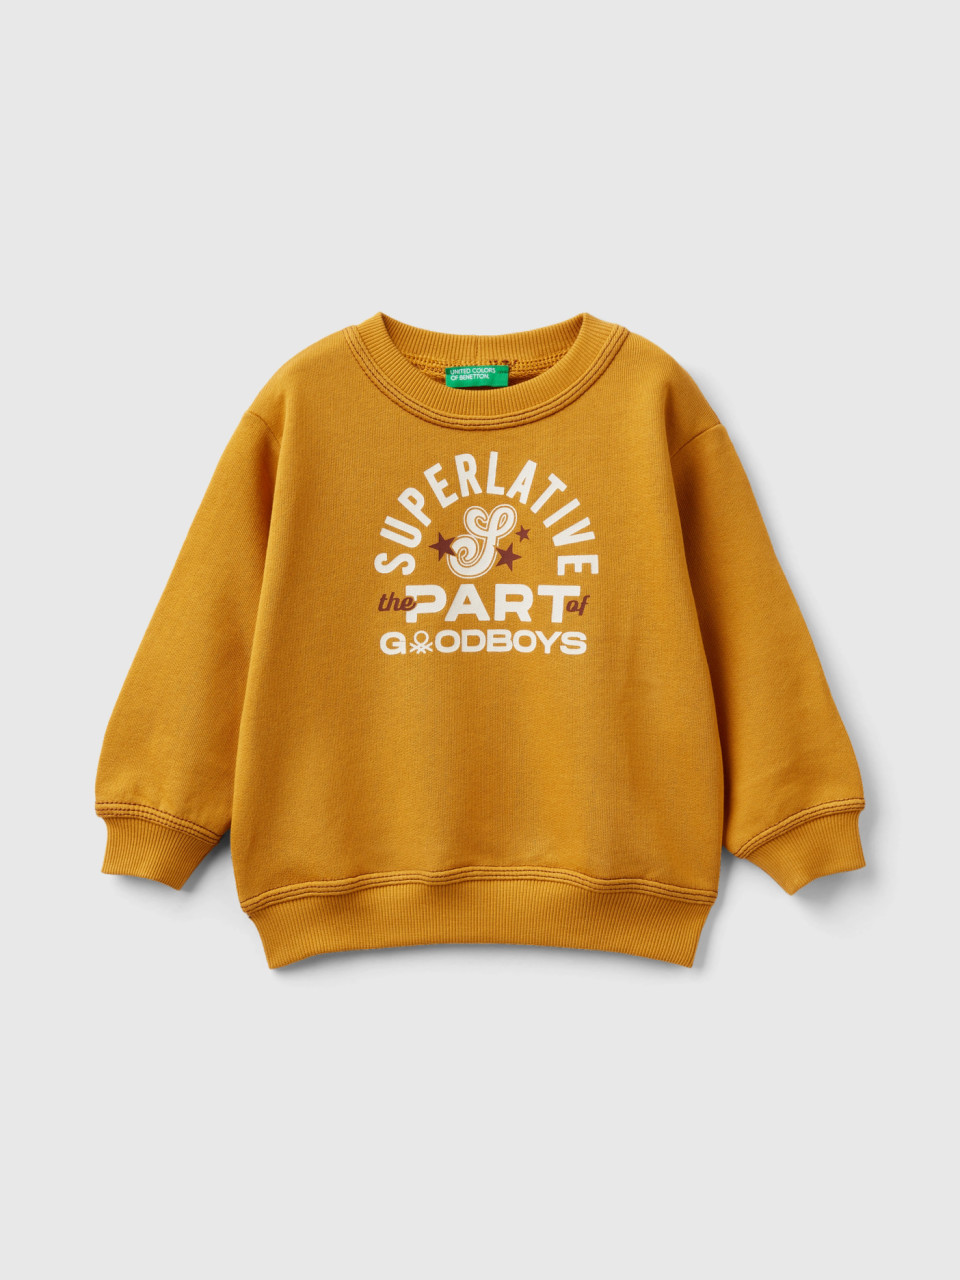 Benetton, Pullover Sweatshirt With Print, Mustard, Kids